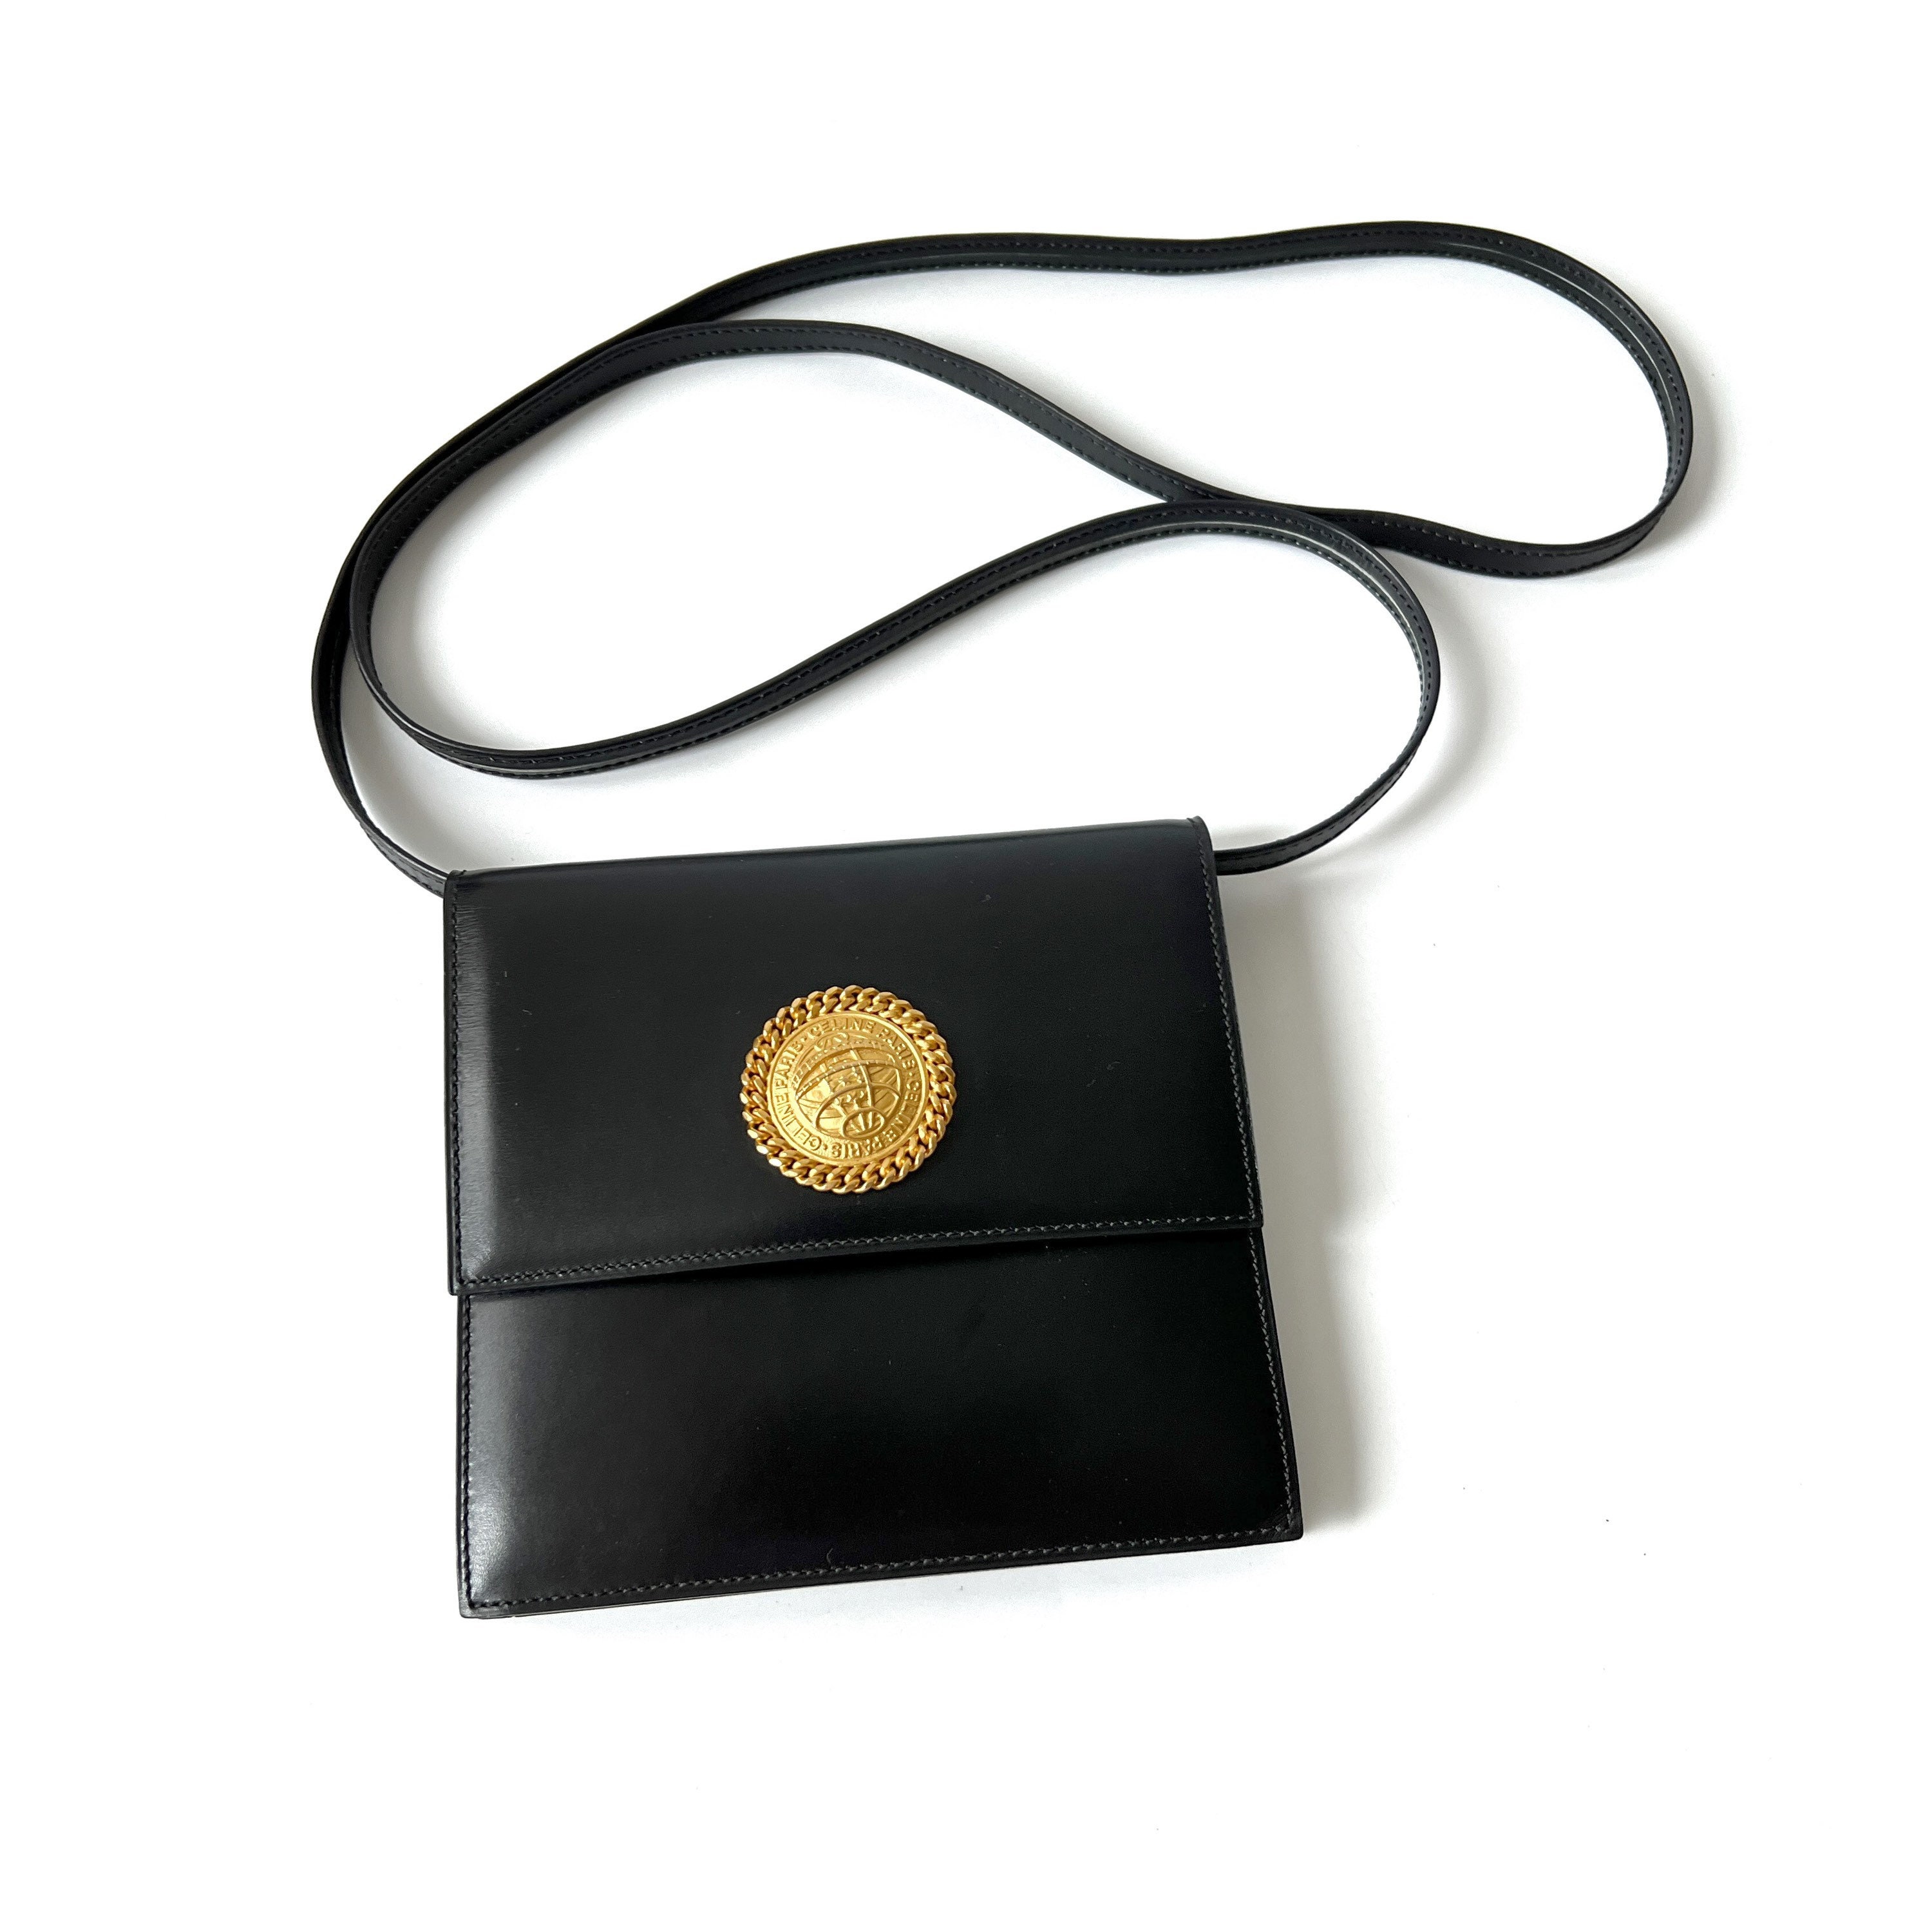 Cel. wallet on strap tan 38,800.- Cel. round coin purse tan kept unused  10,800.- #tammy_brandlover #tammybrandlover #brandlovercafe